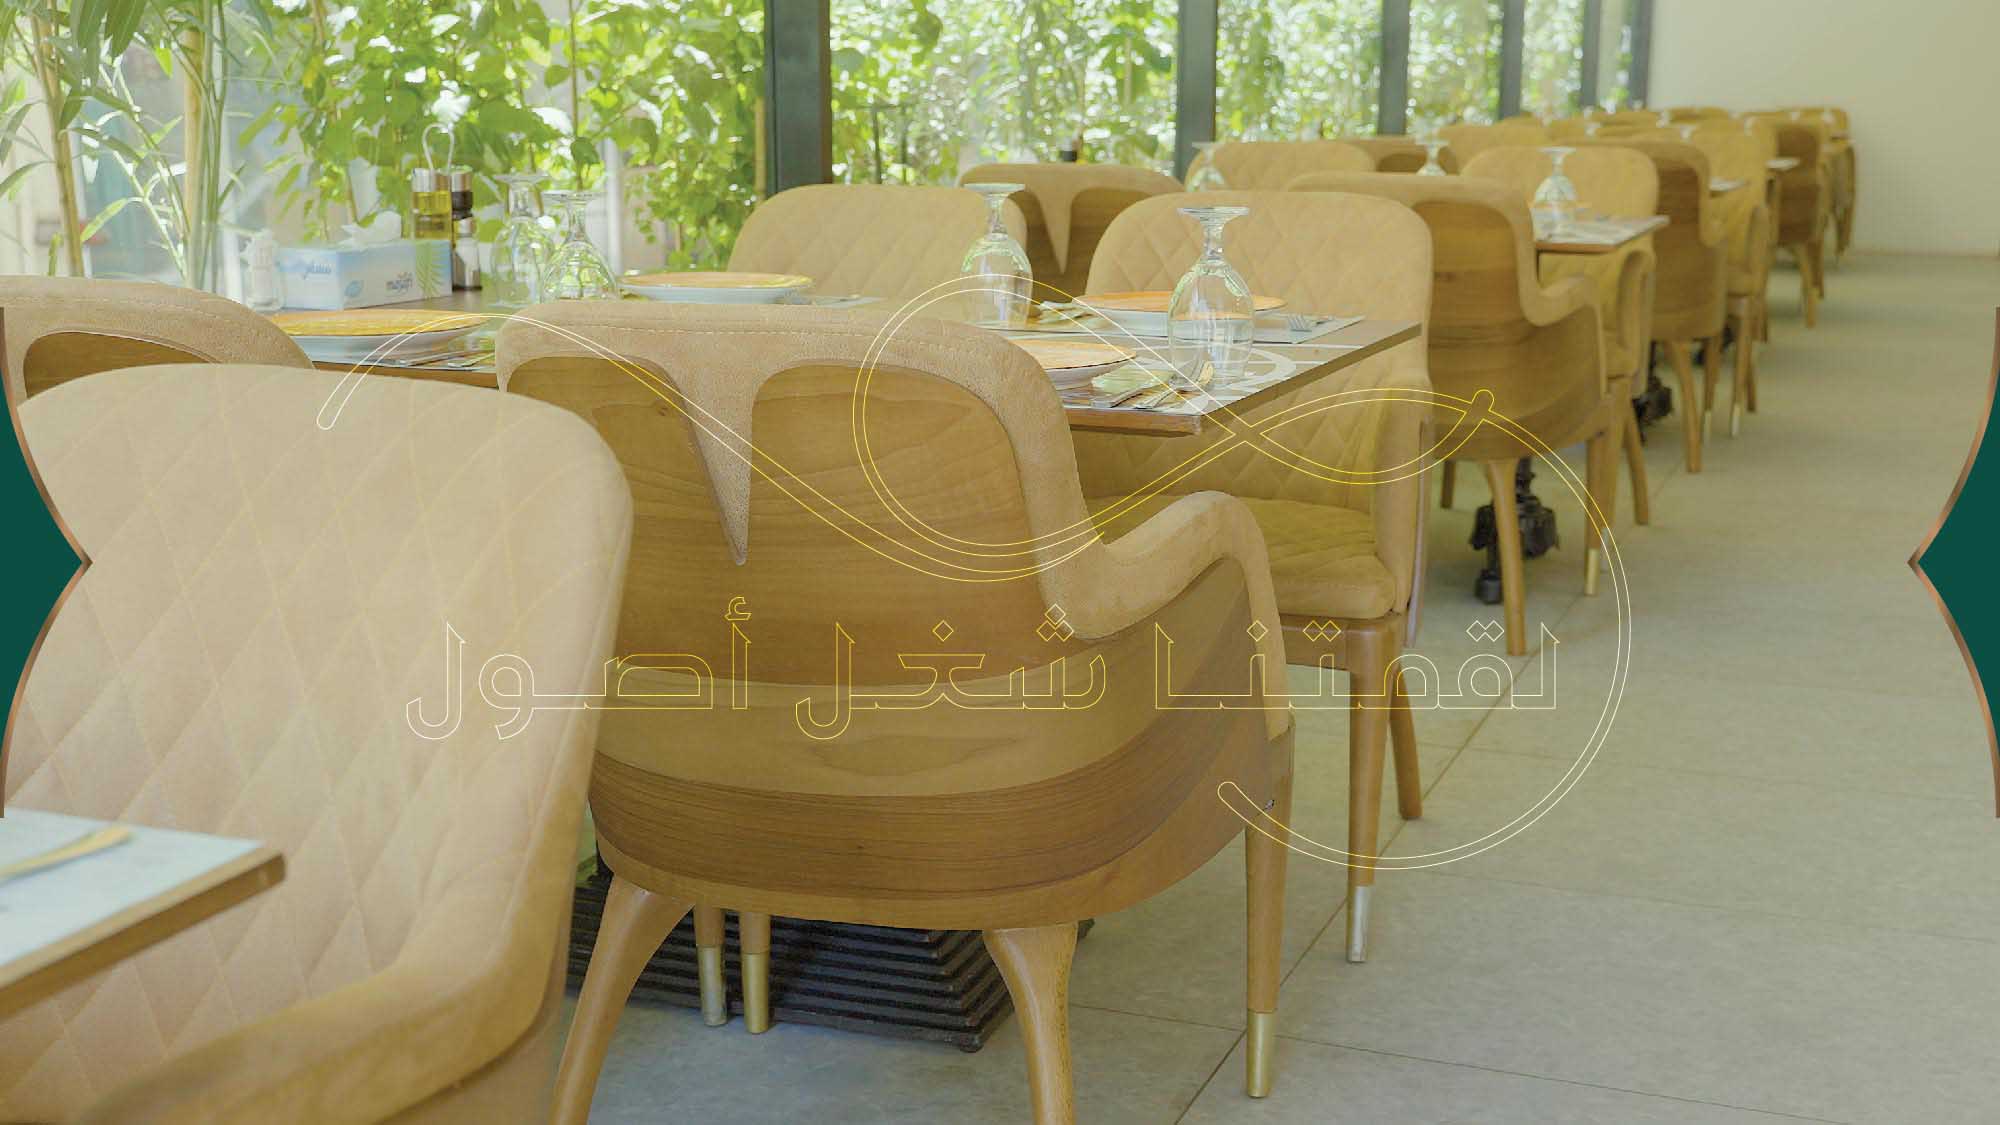 Al Halabya Restaurant: A Culinary Haven for Halabi and Syrian Cuisine ​